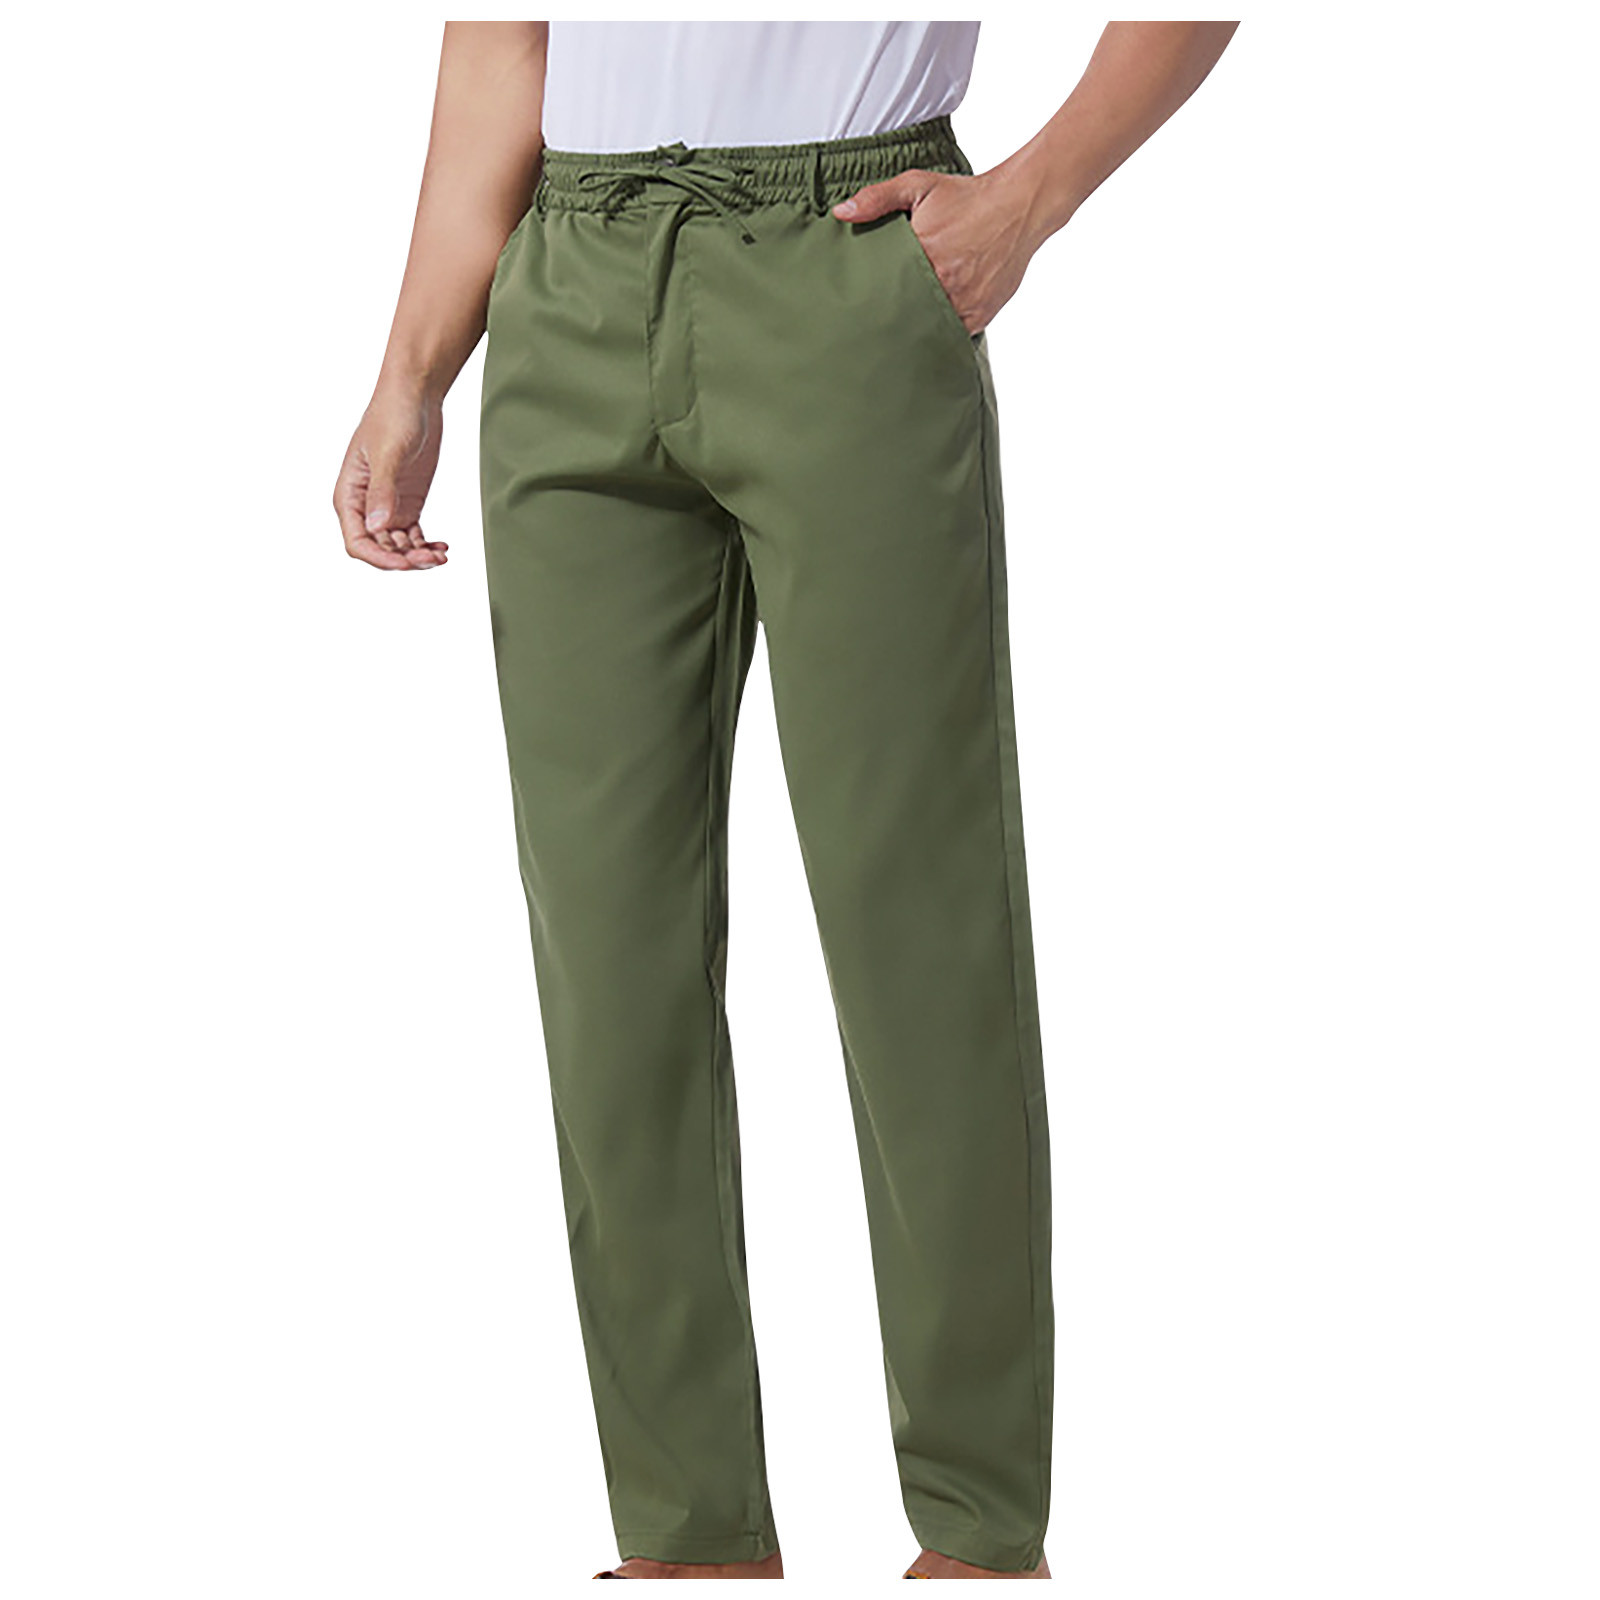 Tdoqot Chinos Pants Men- Casual Drawstring Comftable Elastic Waist Slim Cotton Mens Pants Army Green - image 2 of 6